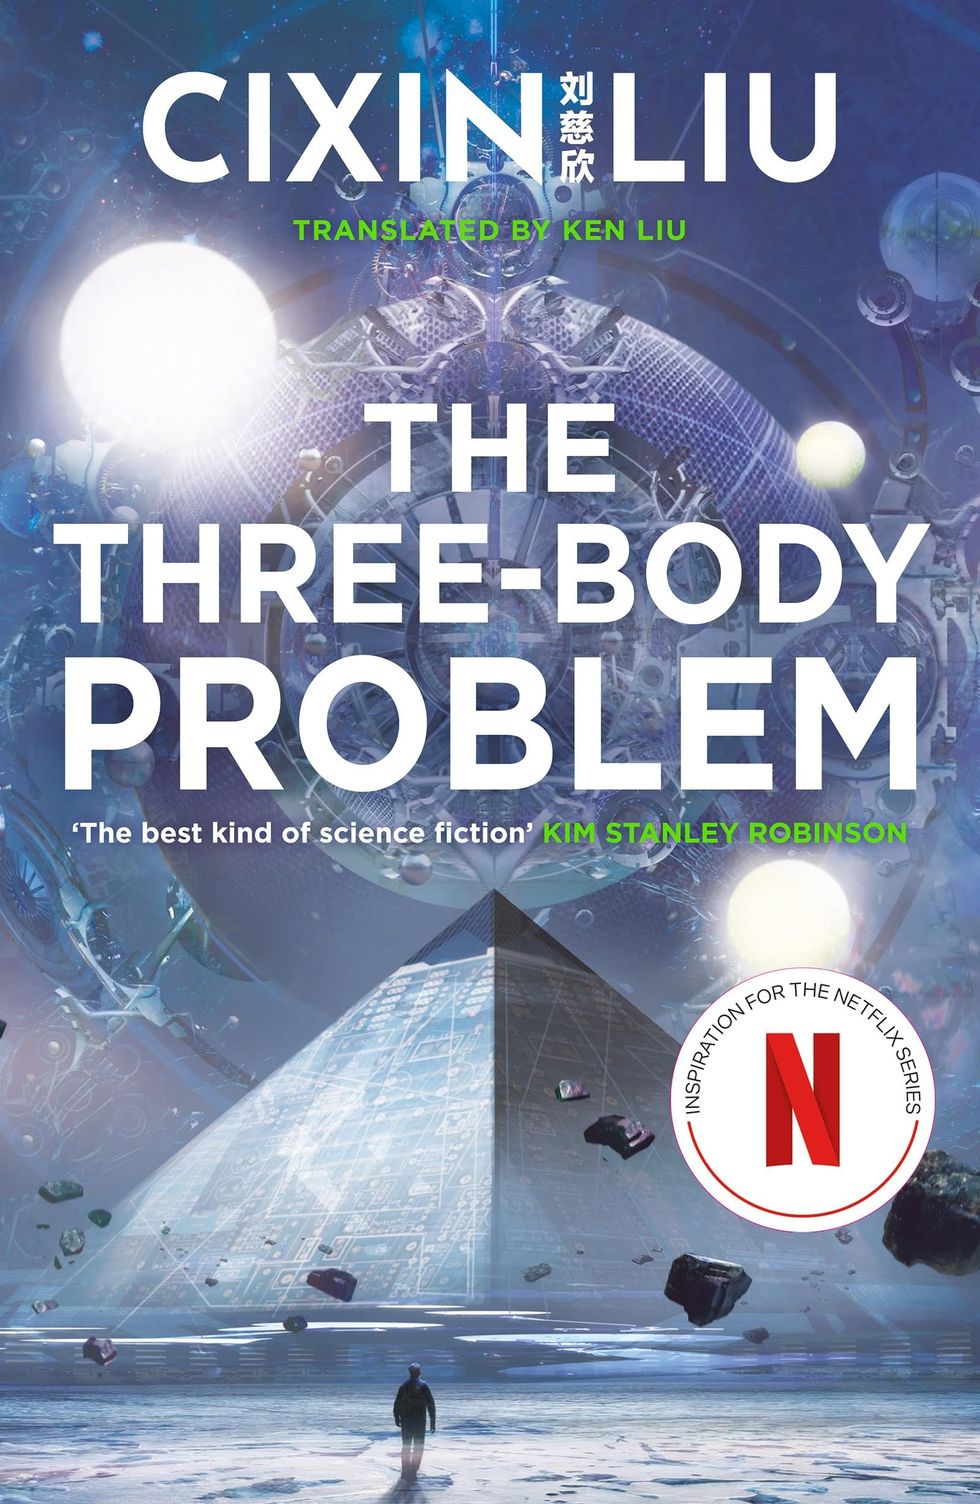 The Three-Body Problem (2006)